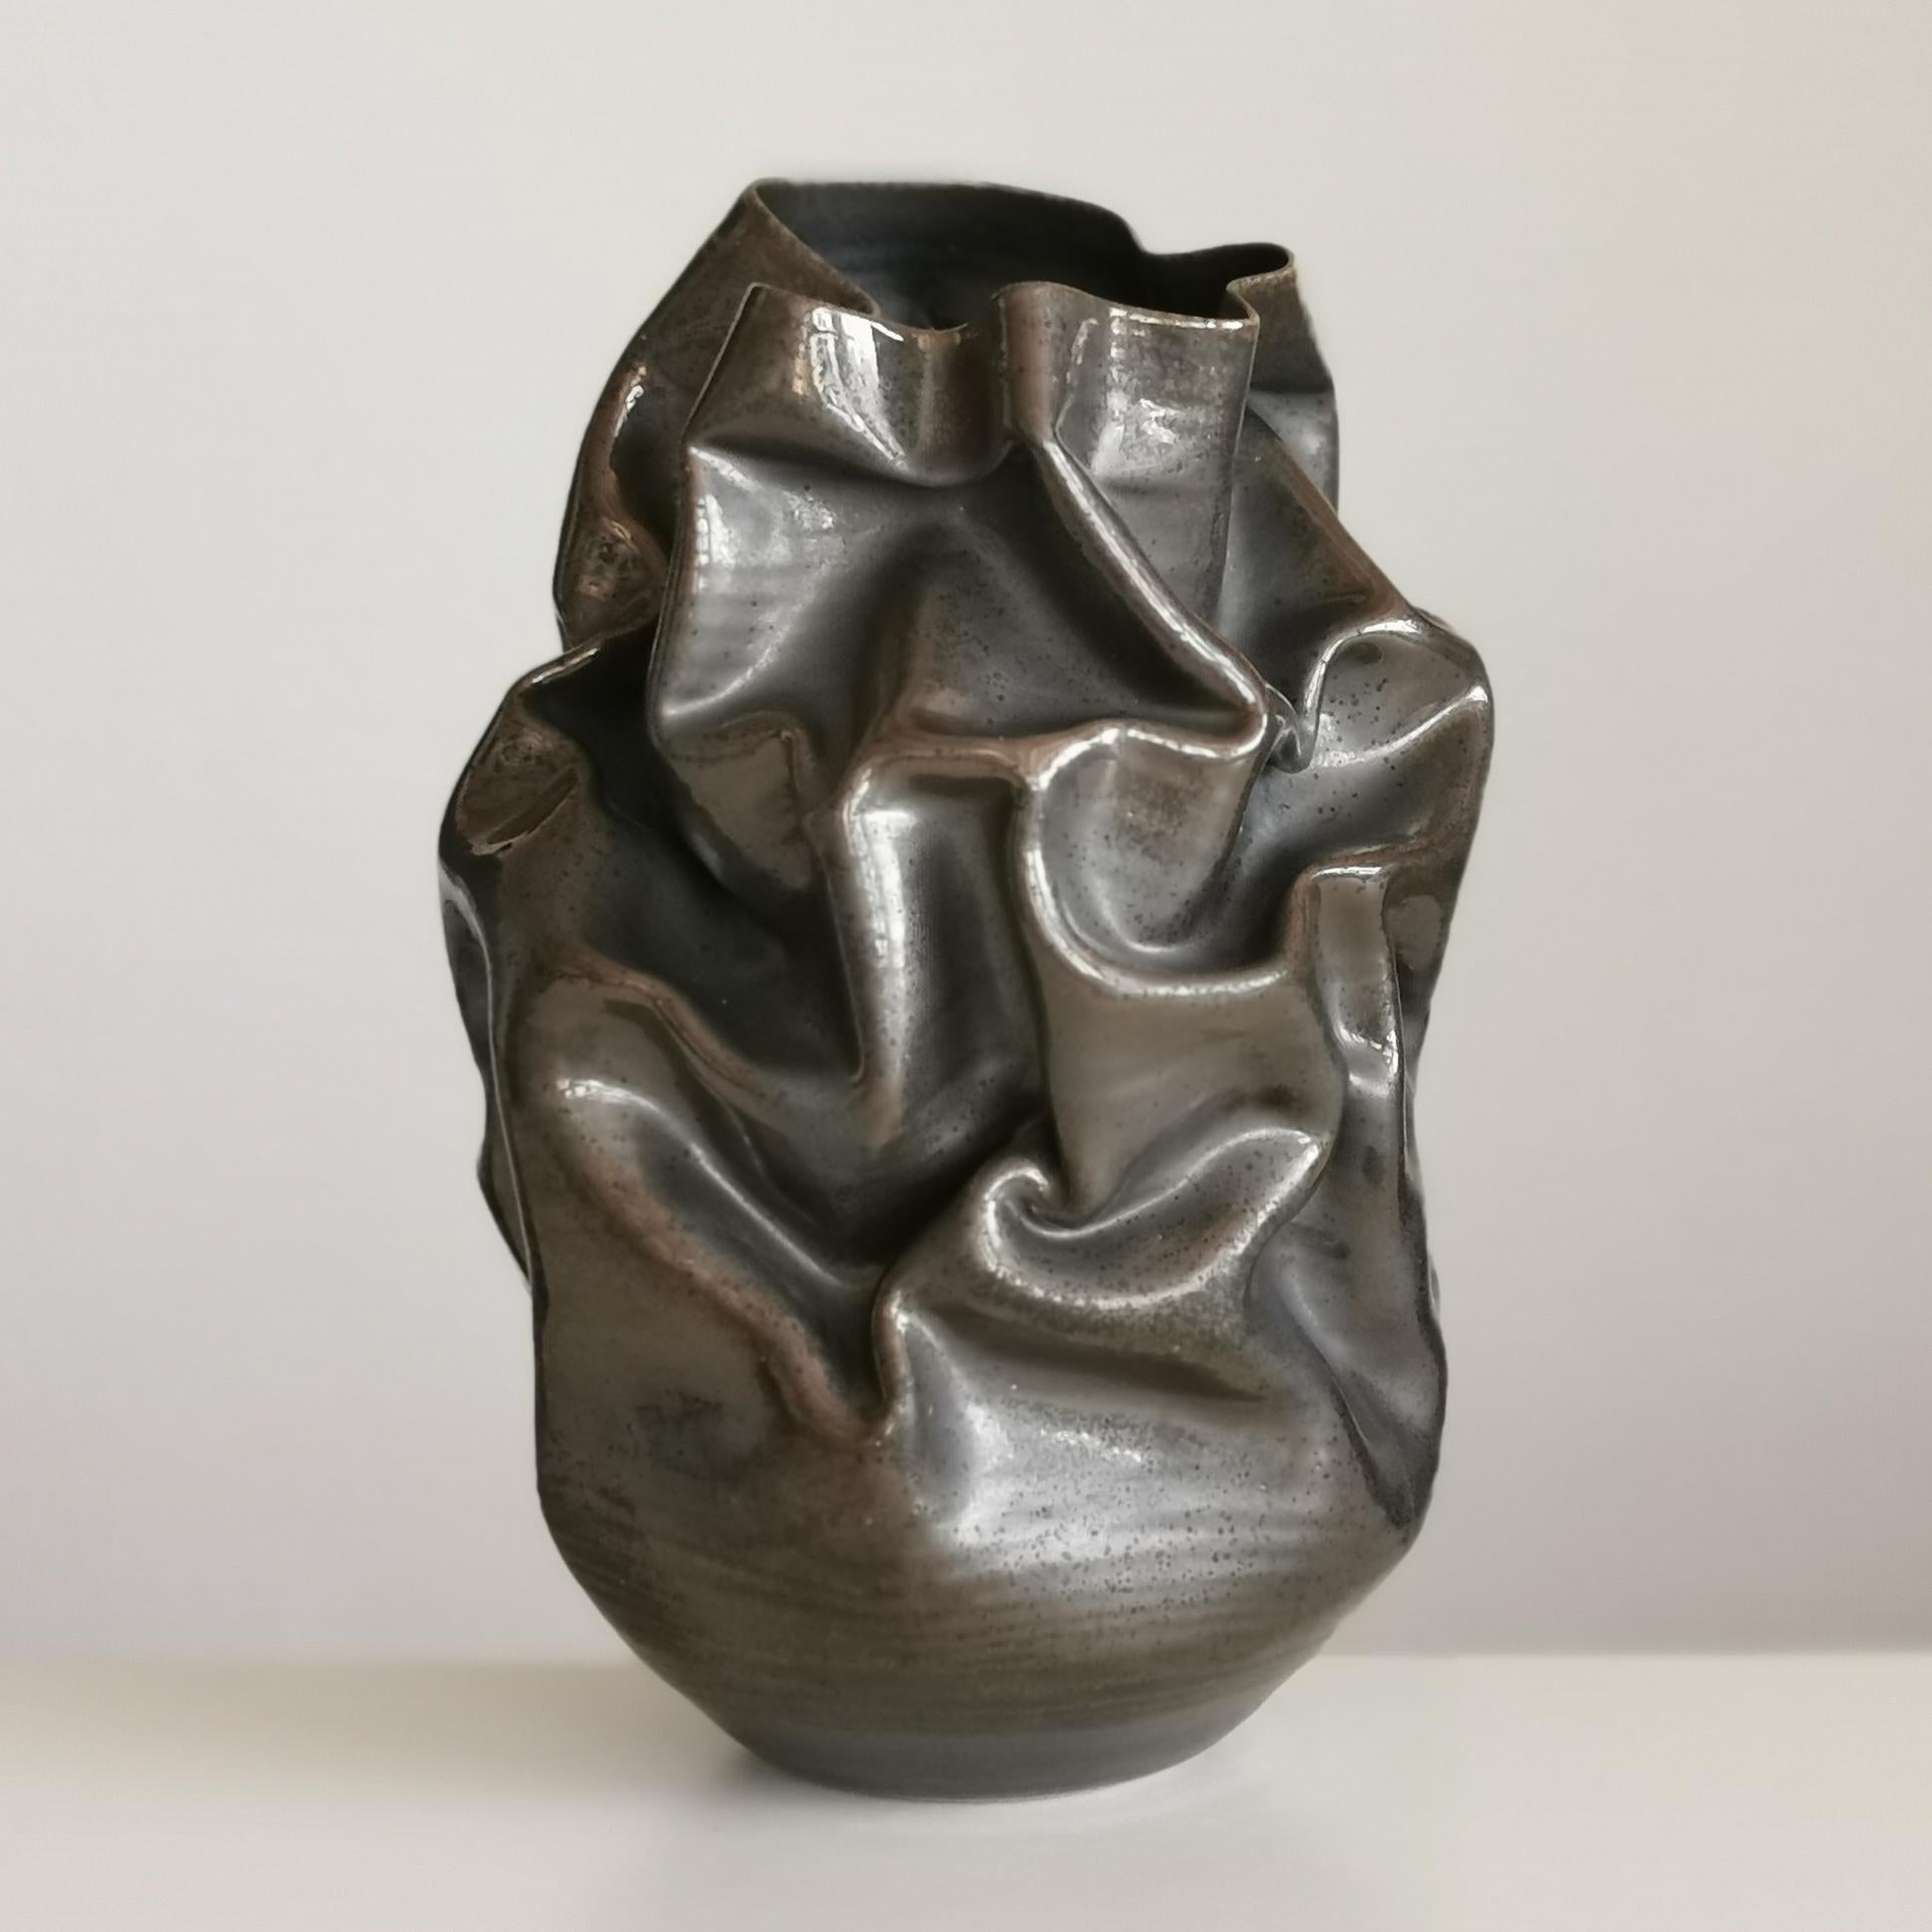 Organic Modern Black Metallic Crumpled Form No 32, Ceramic Vessel by Nicholas Arroyave-Portela